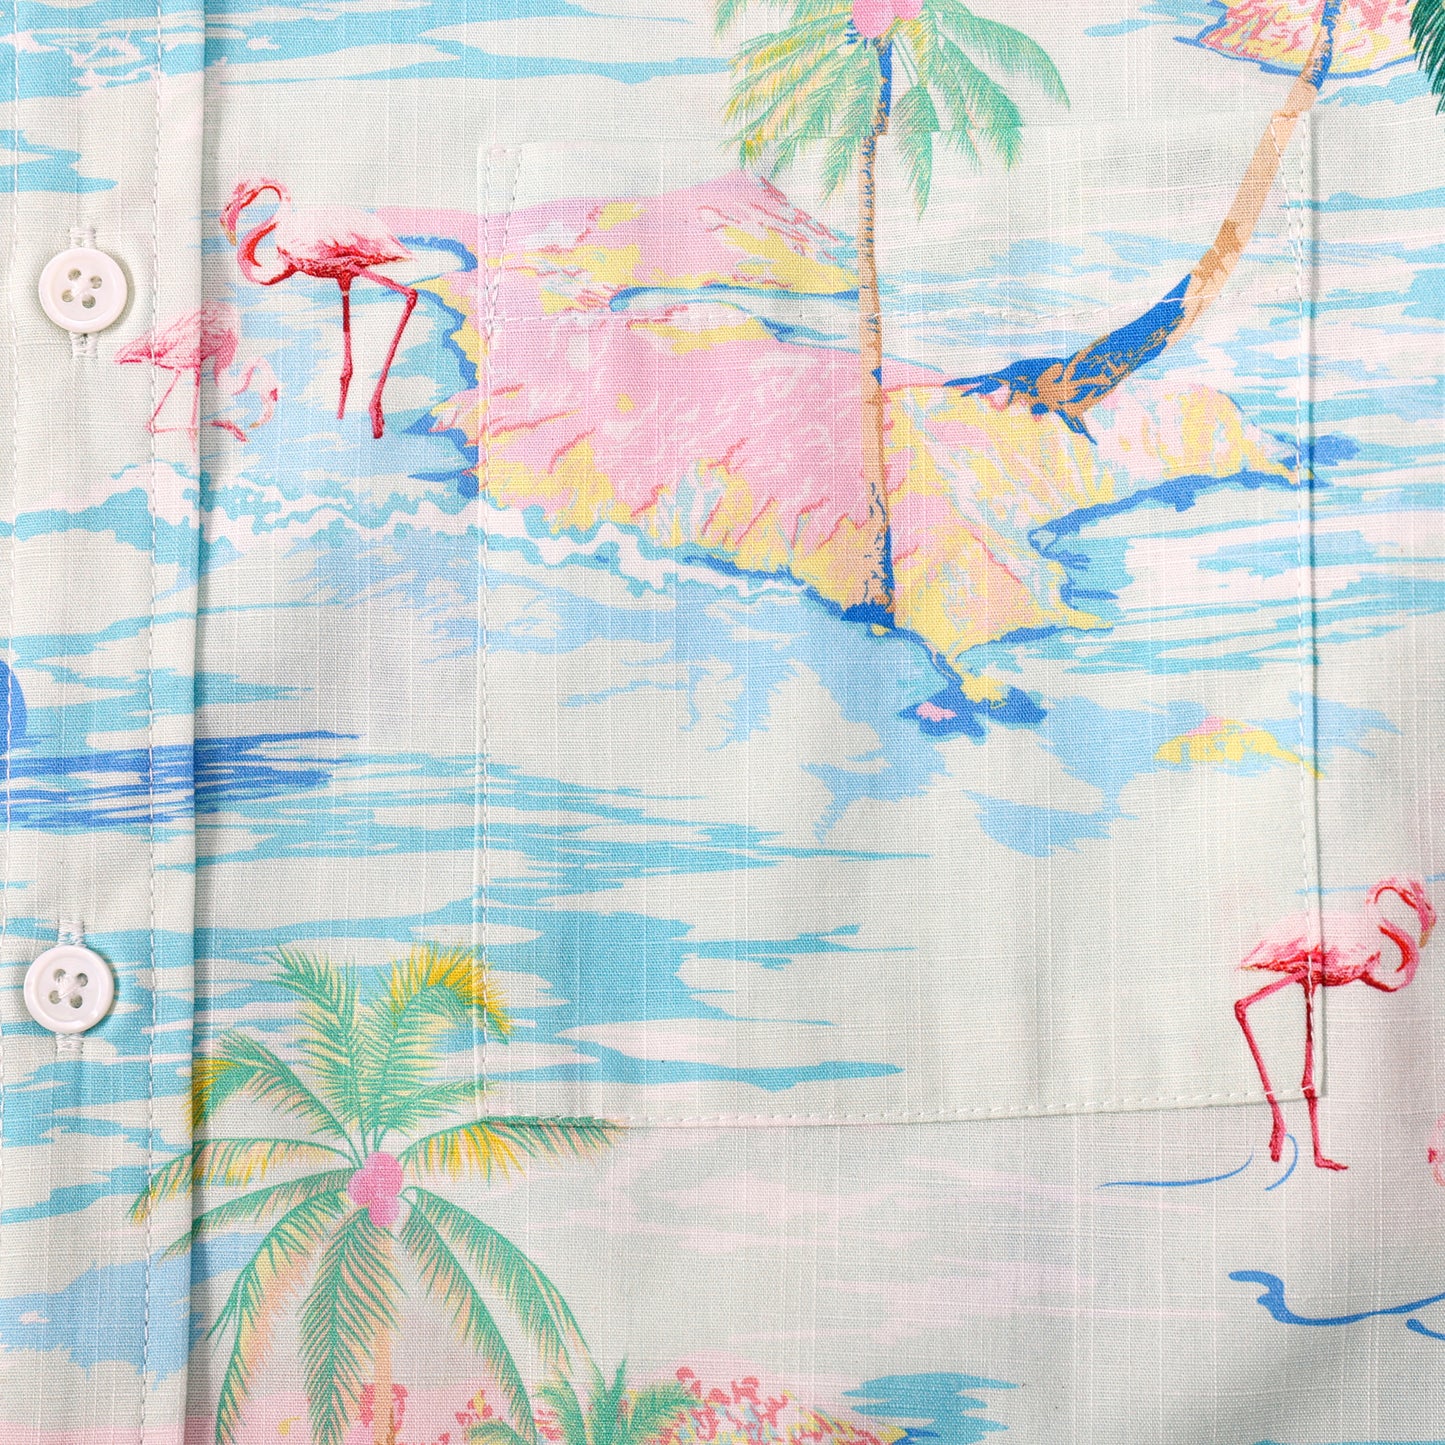 Beach Flamingo Pattern Short Sleeve Shirt